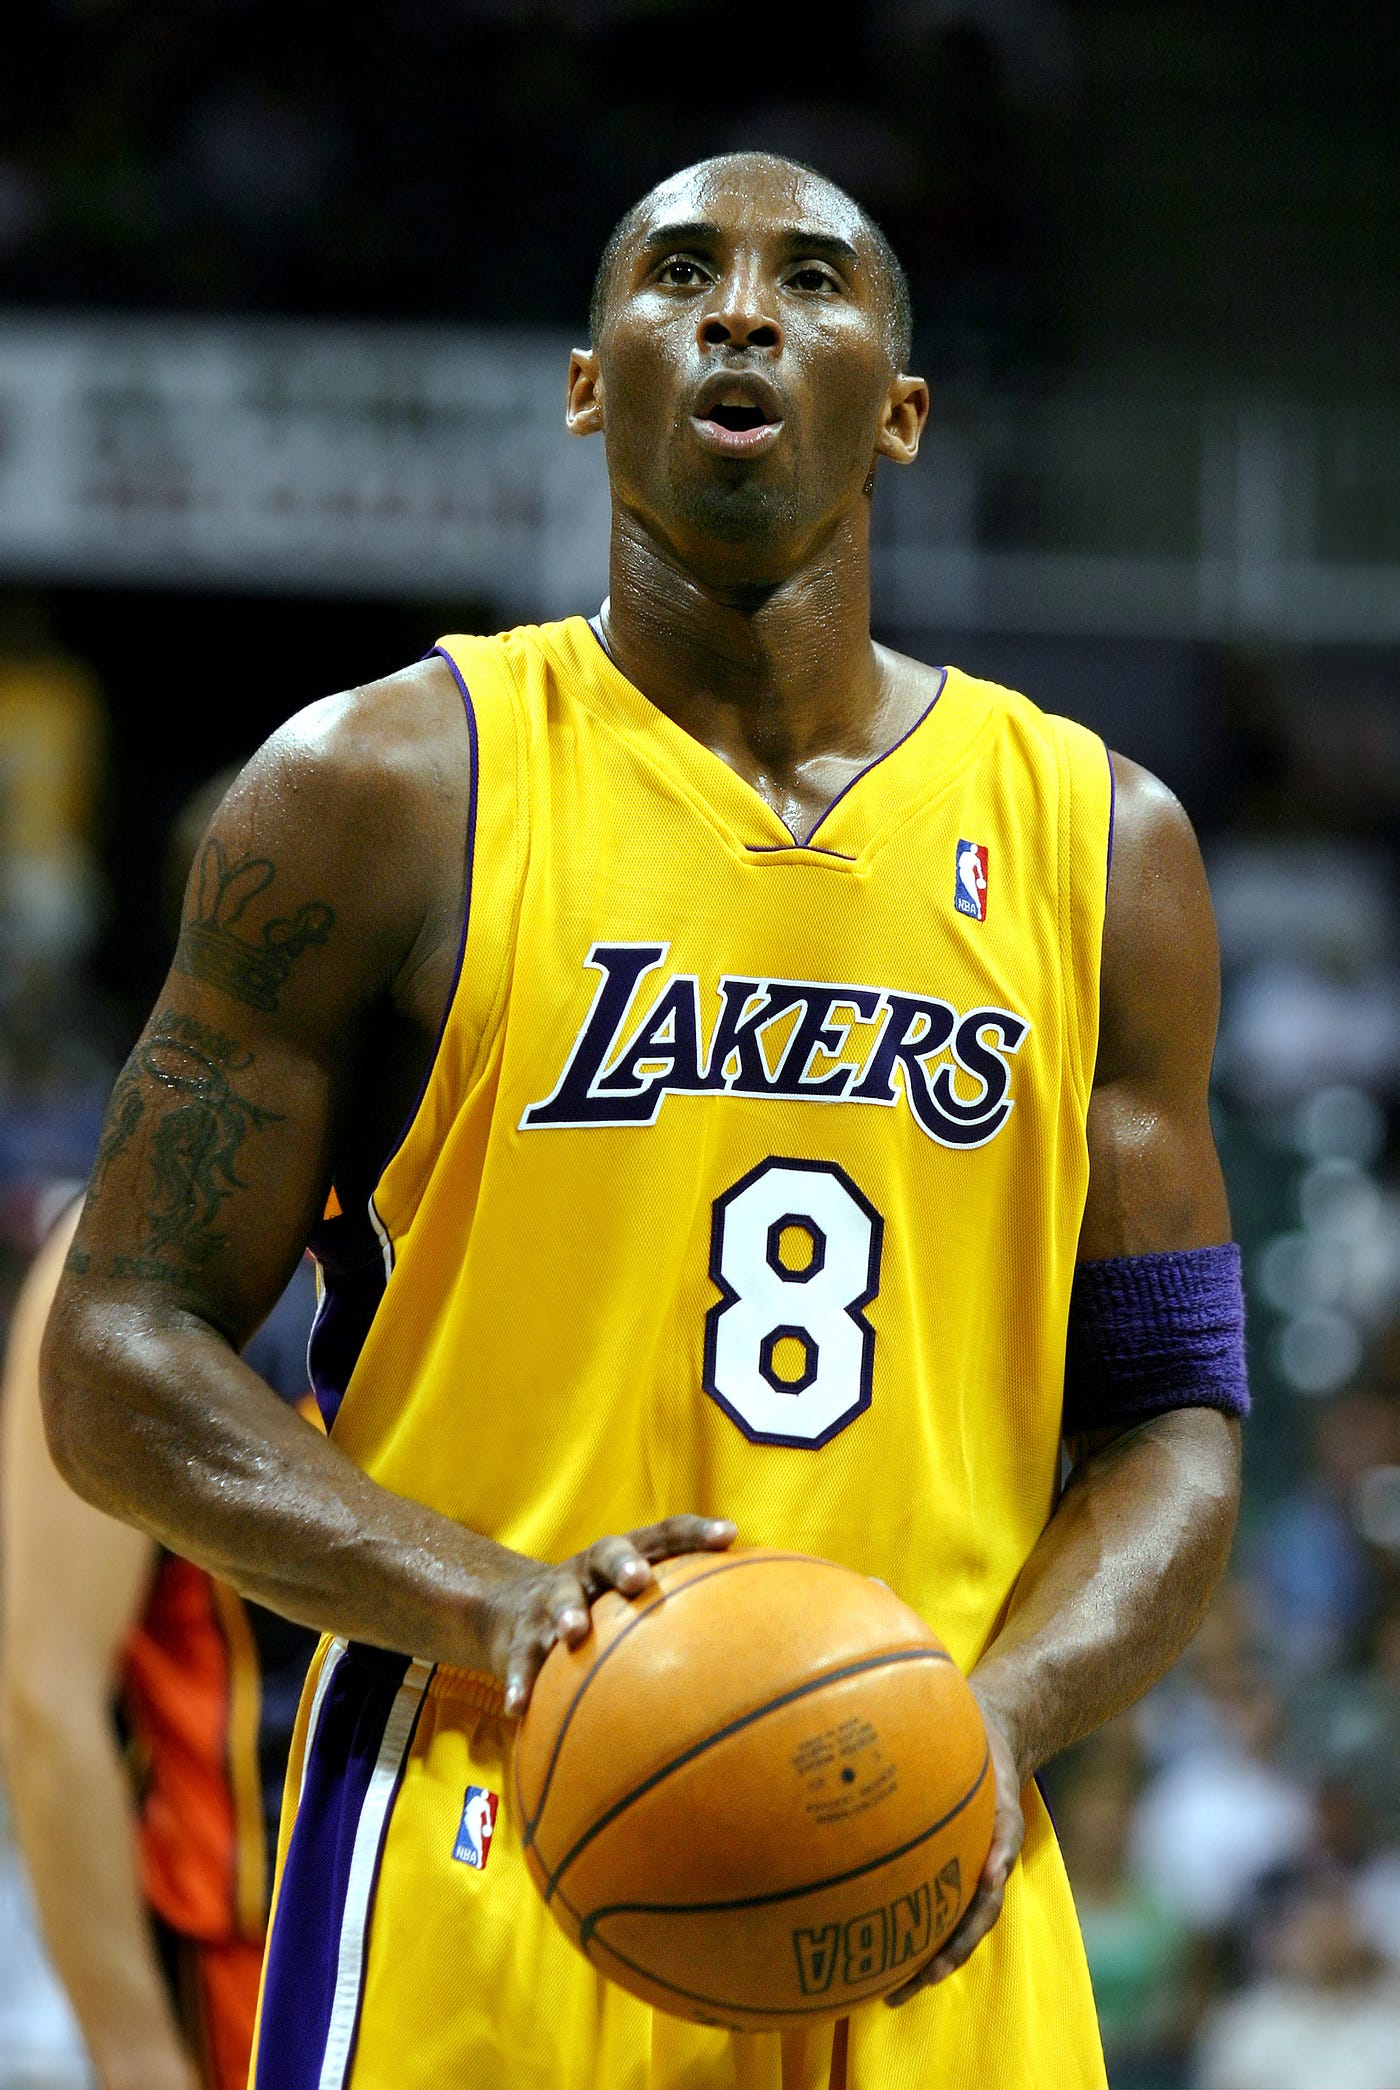 Los Angeles Lakers Kobe Bryant Funko Pop Figure 1998 NBA All-star Game 